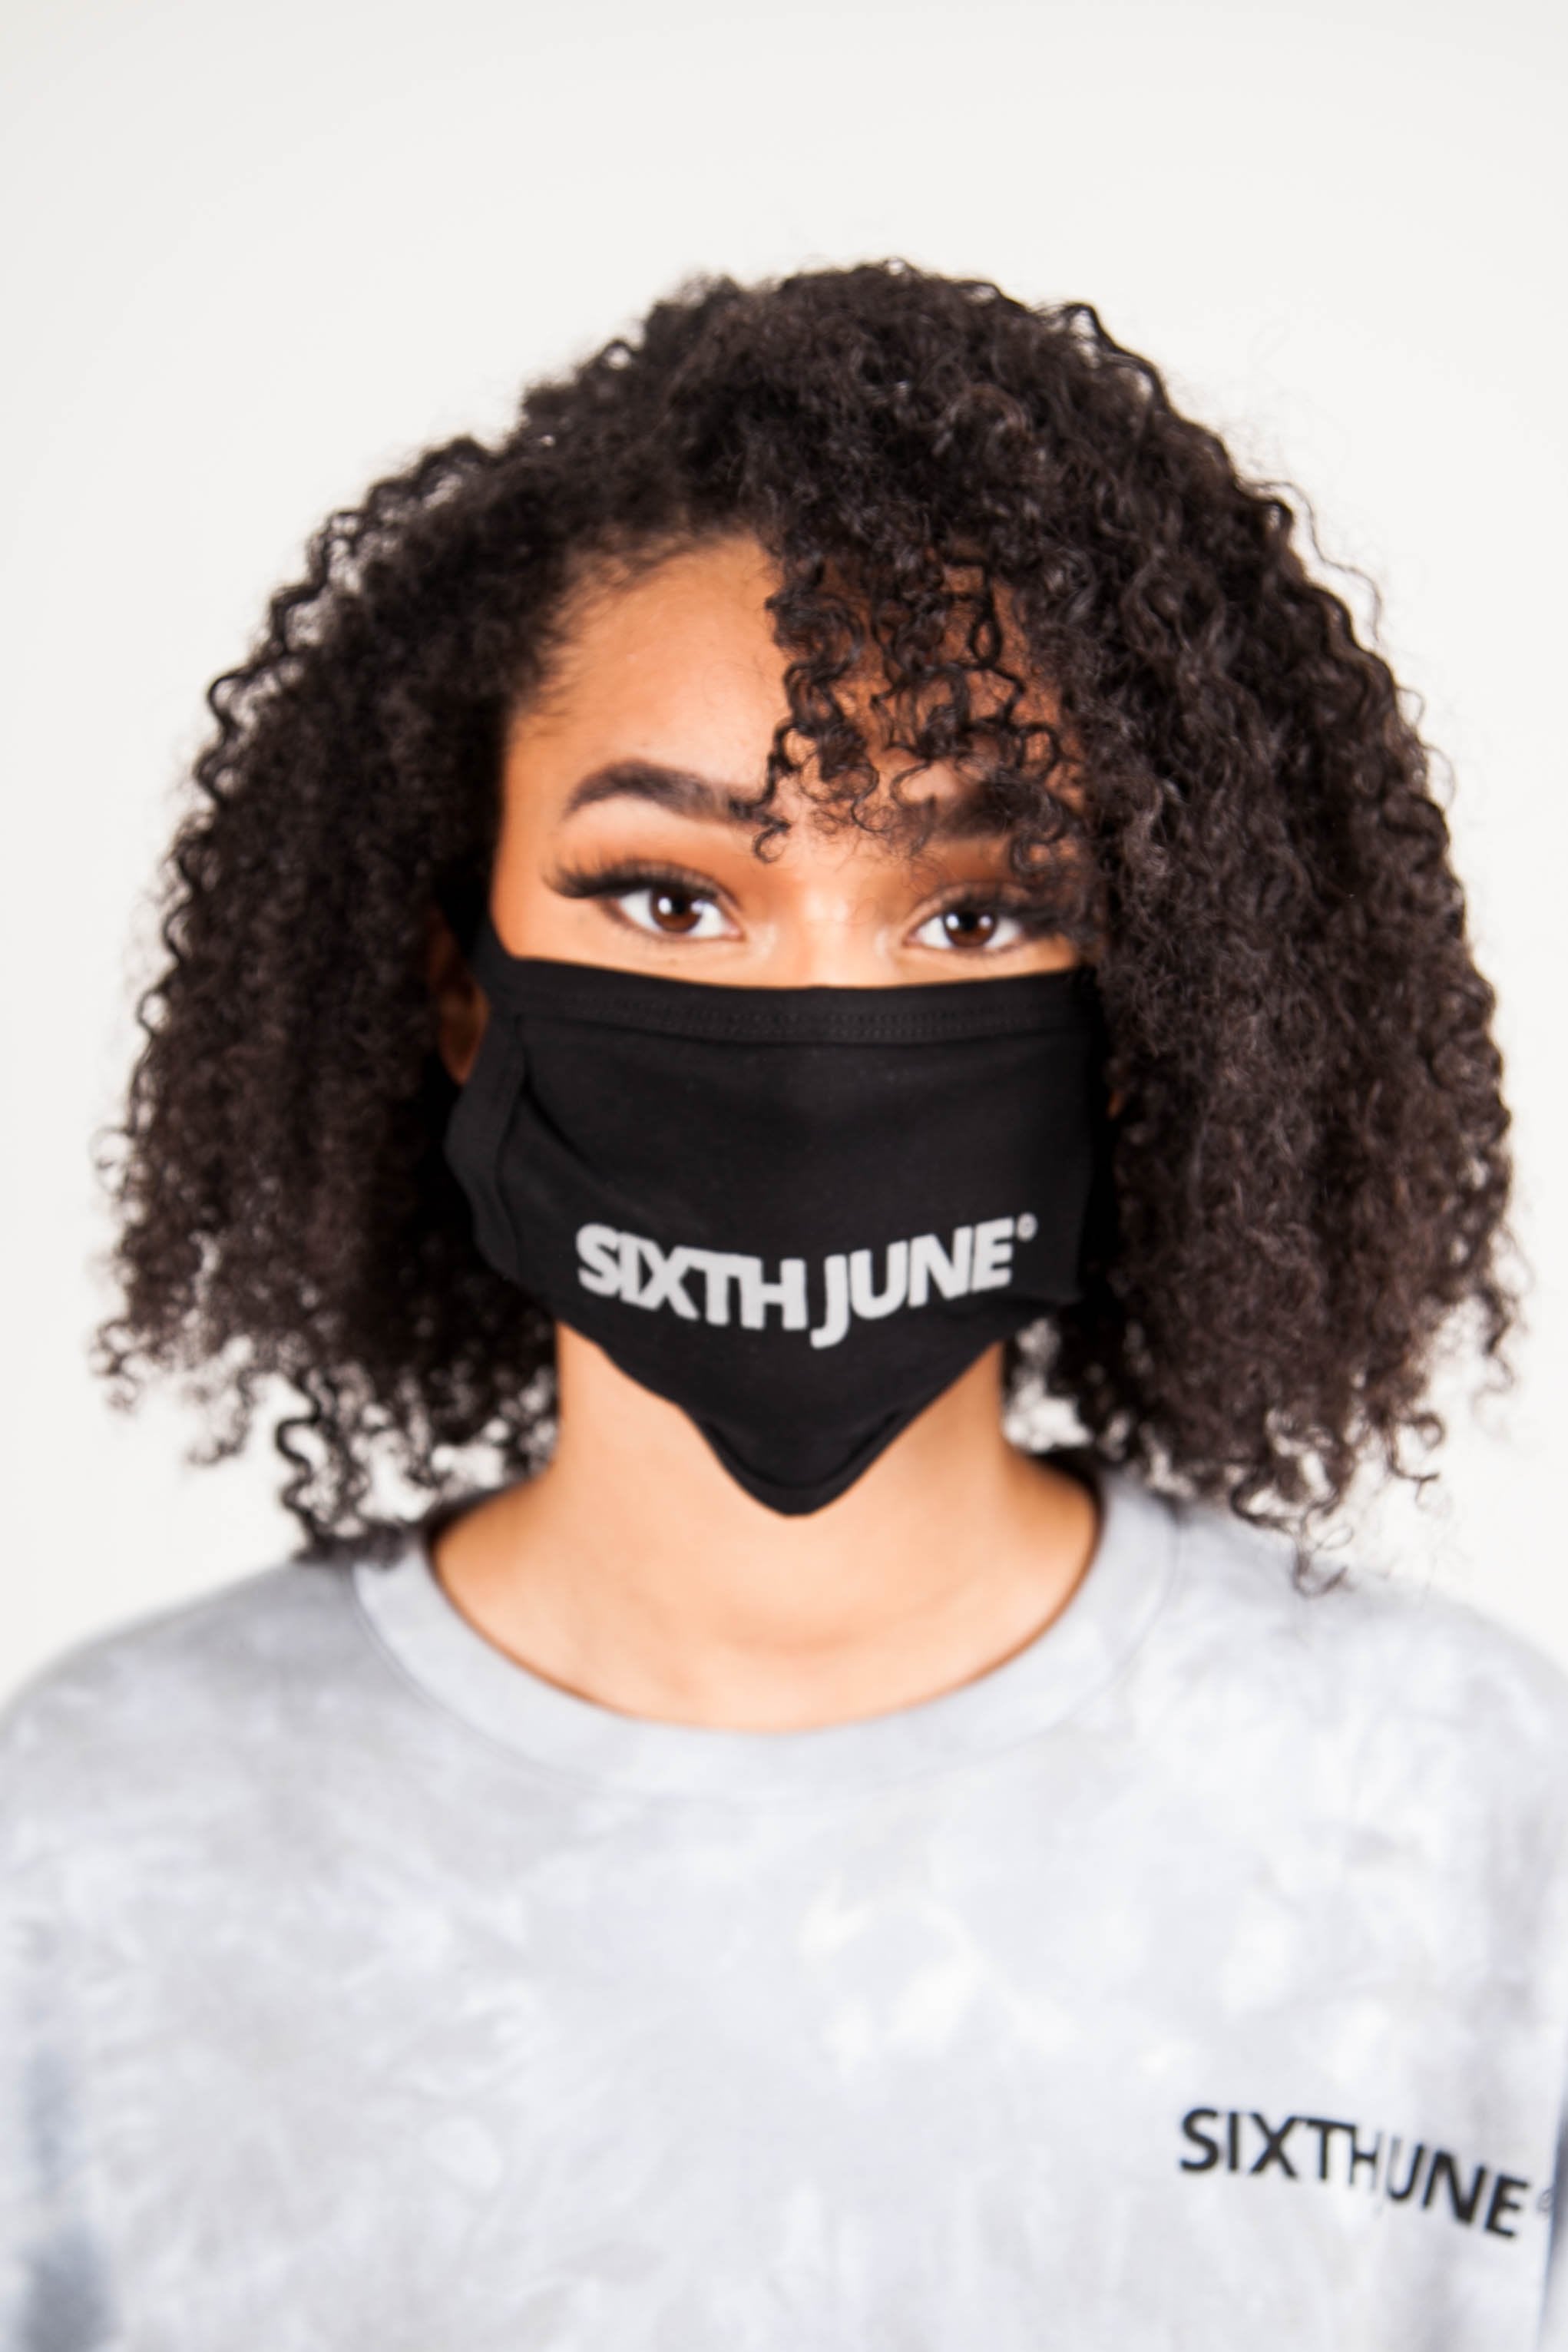 Sixth June - Masque imprimé brillant noir